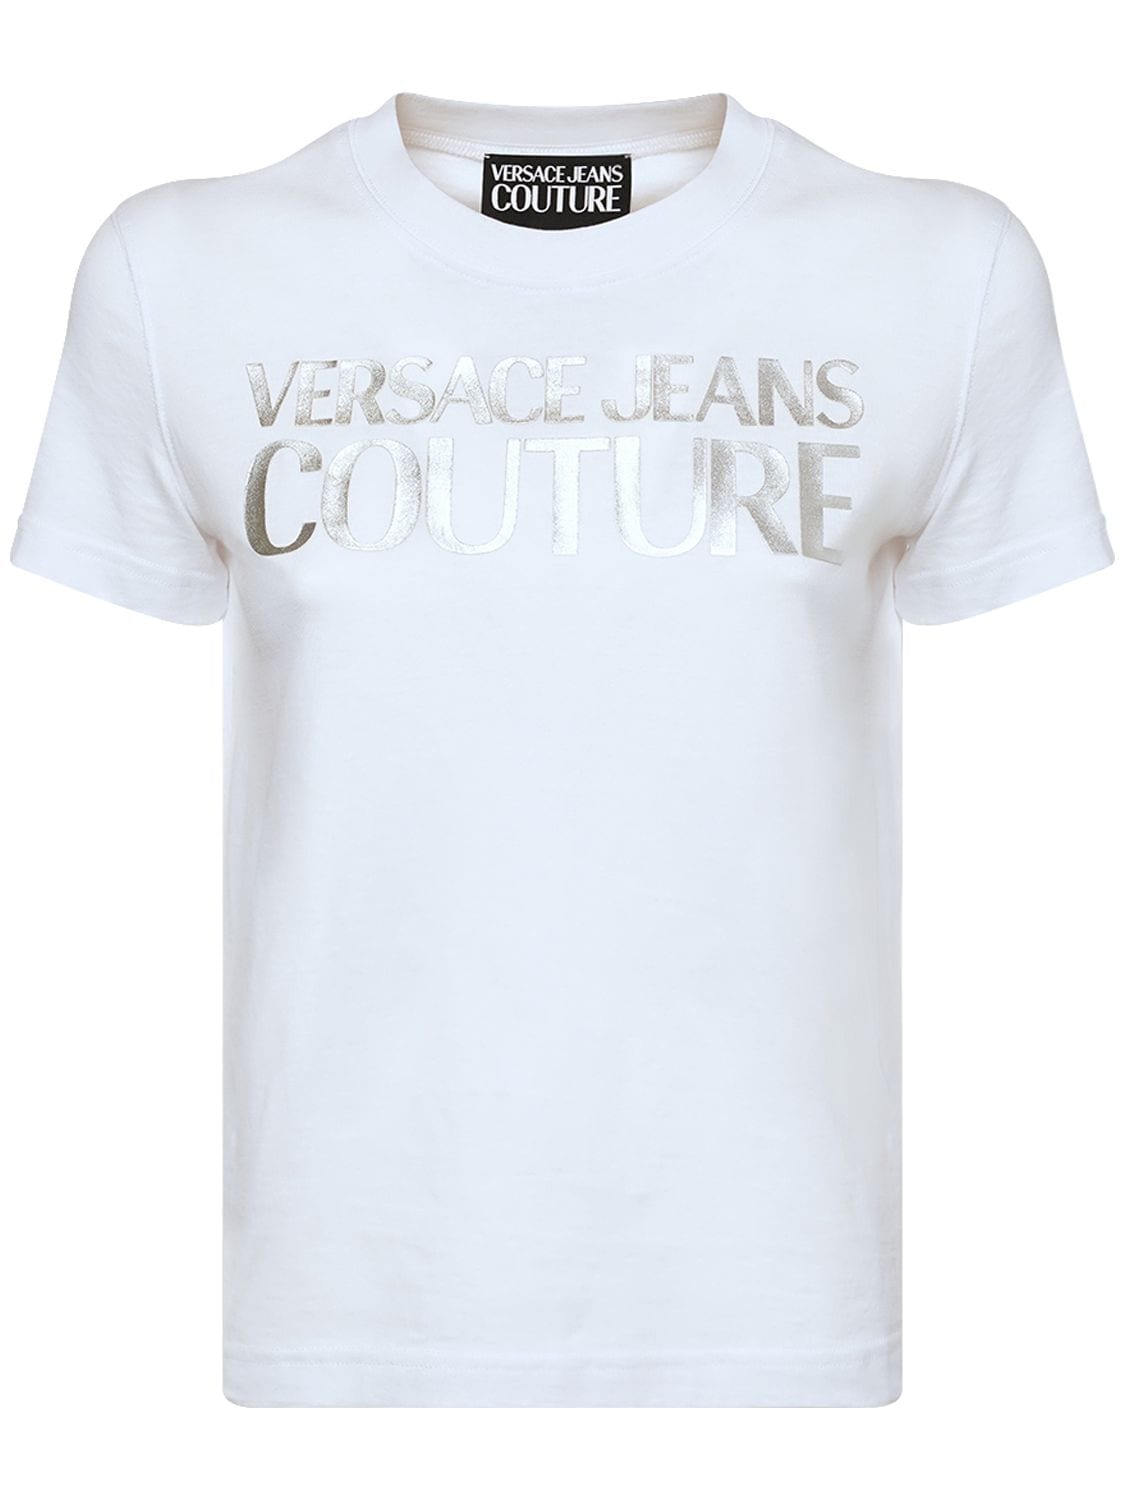 VERSACE JEANS COUTURE Logo Cotton Jersey T-shirt